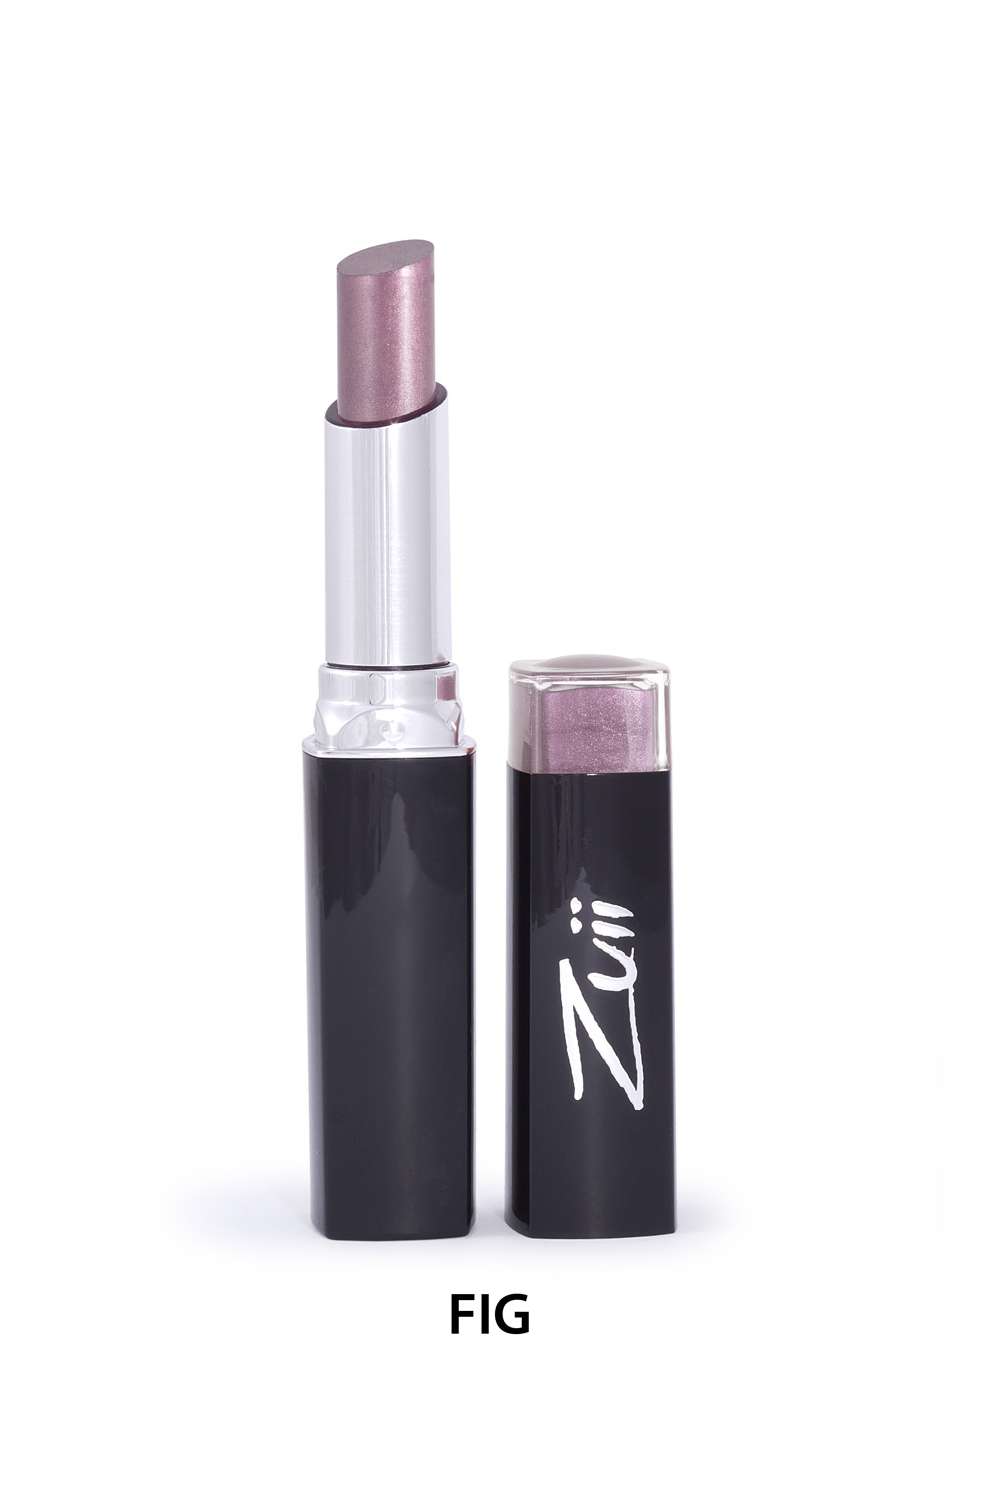 Zuii Organic Certified Flora Sheerlip Lipstick -Fig